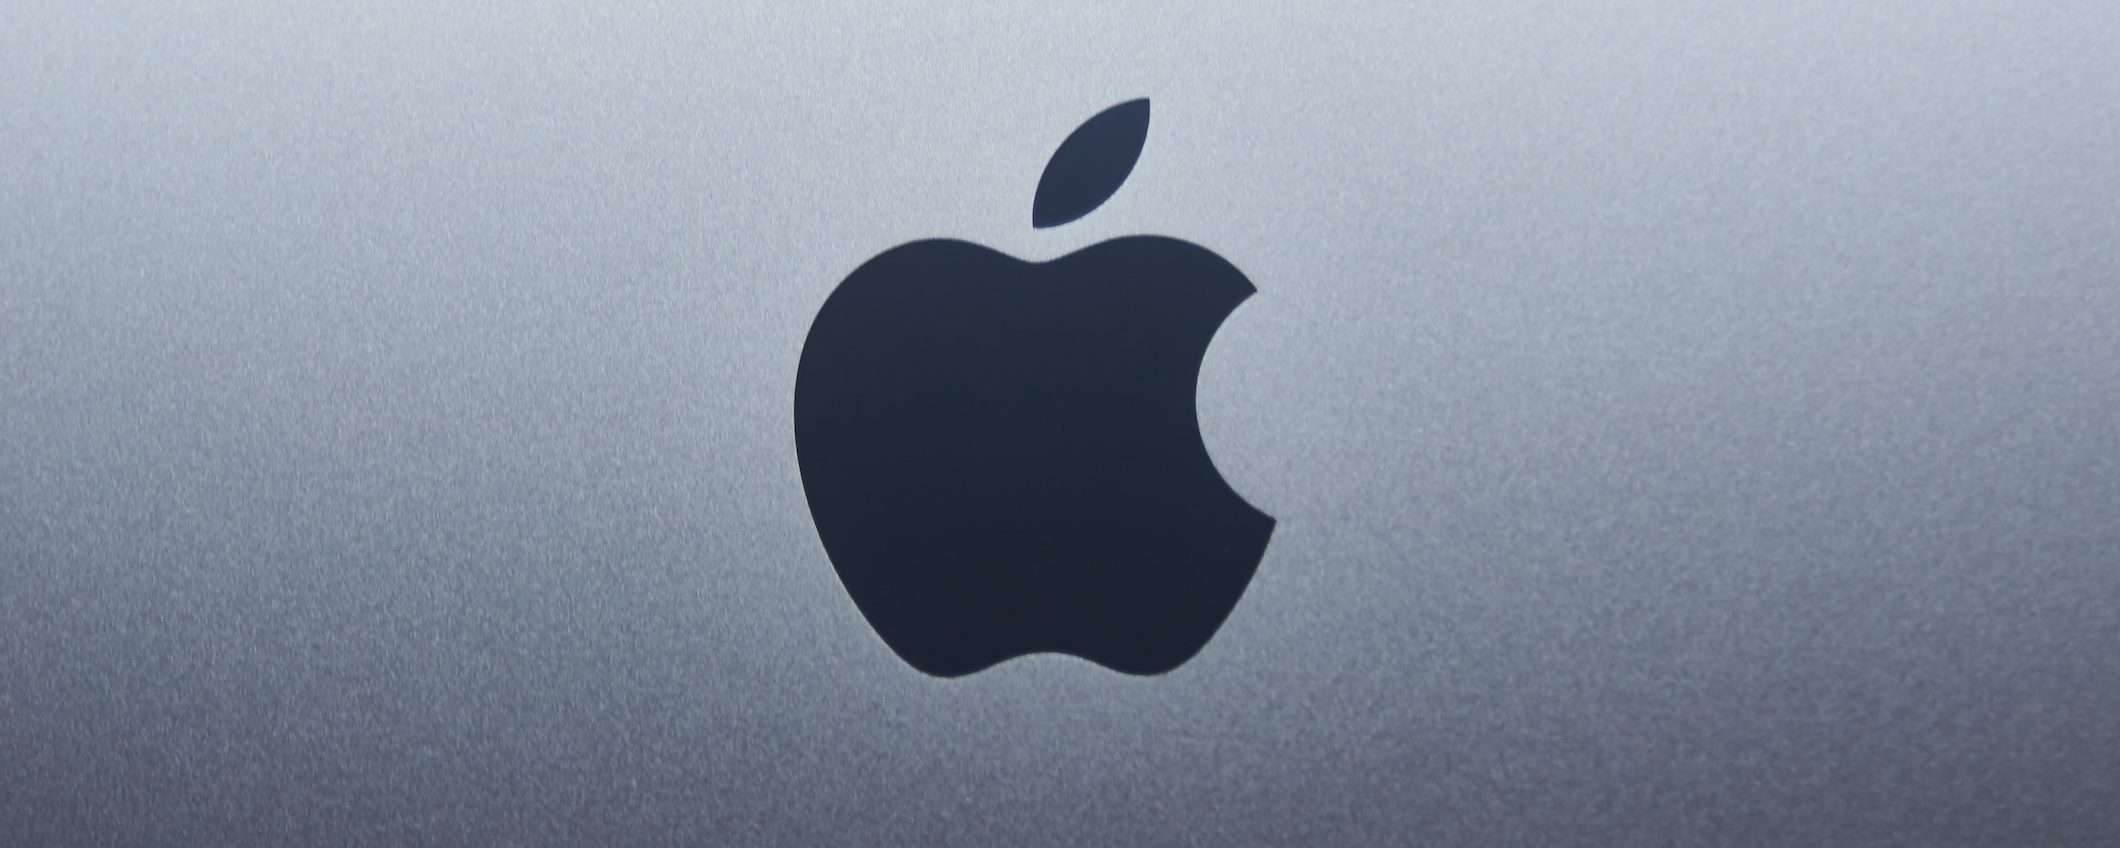 Apple: TSMC ufficializza i chip a 1,4 nm per i futuri iPhone